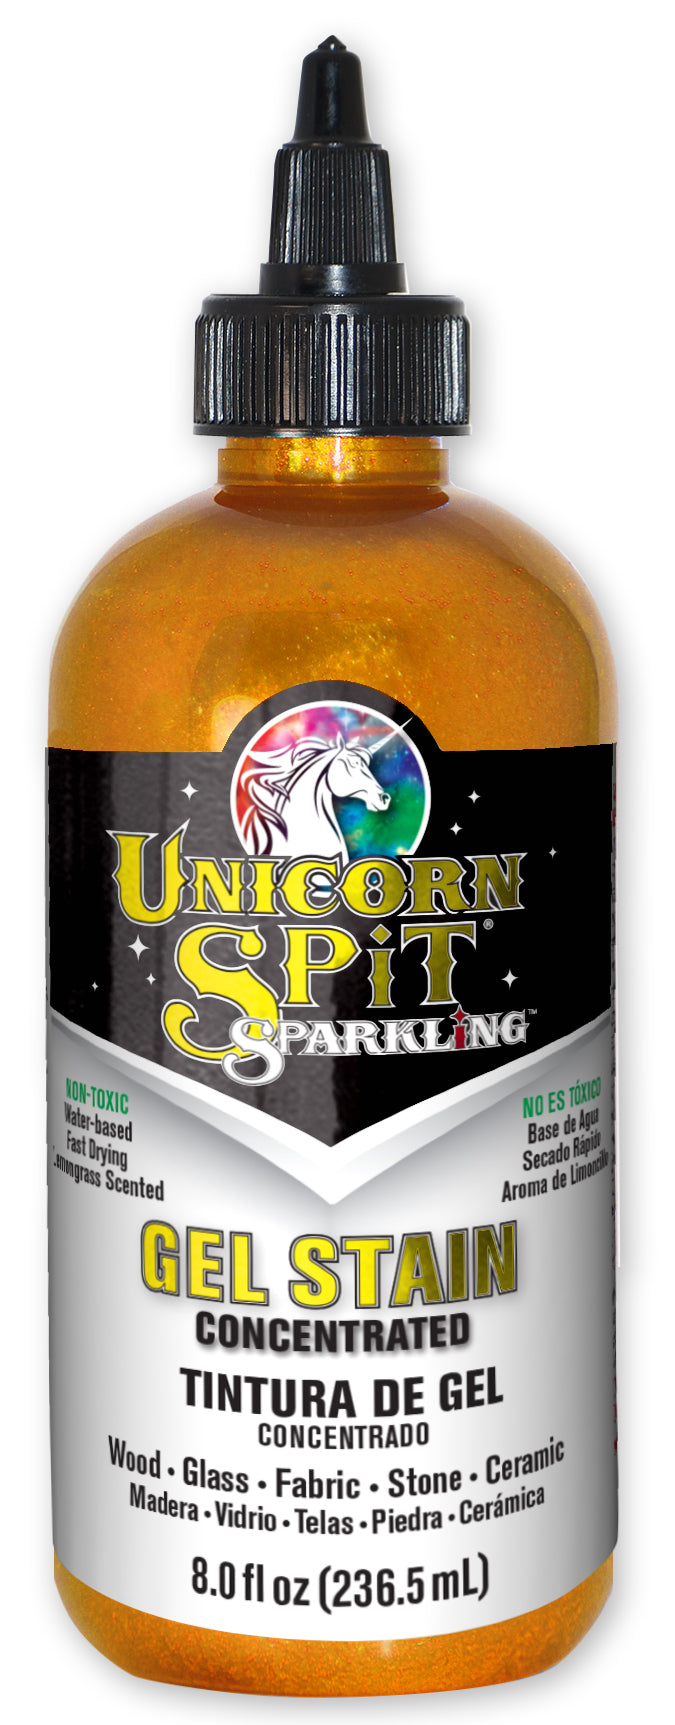 Unicorn Spit Sparkling 8oz